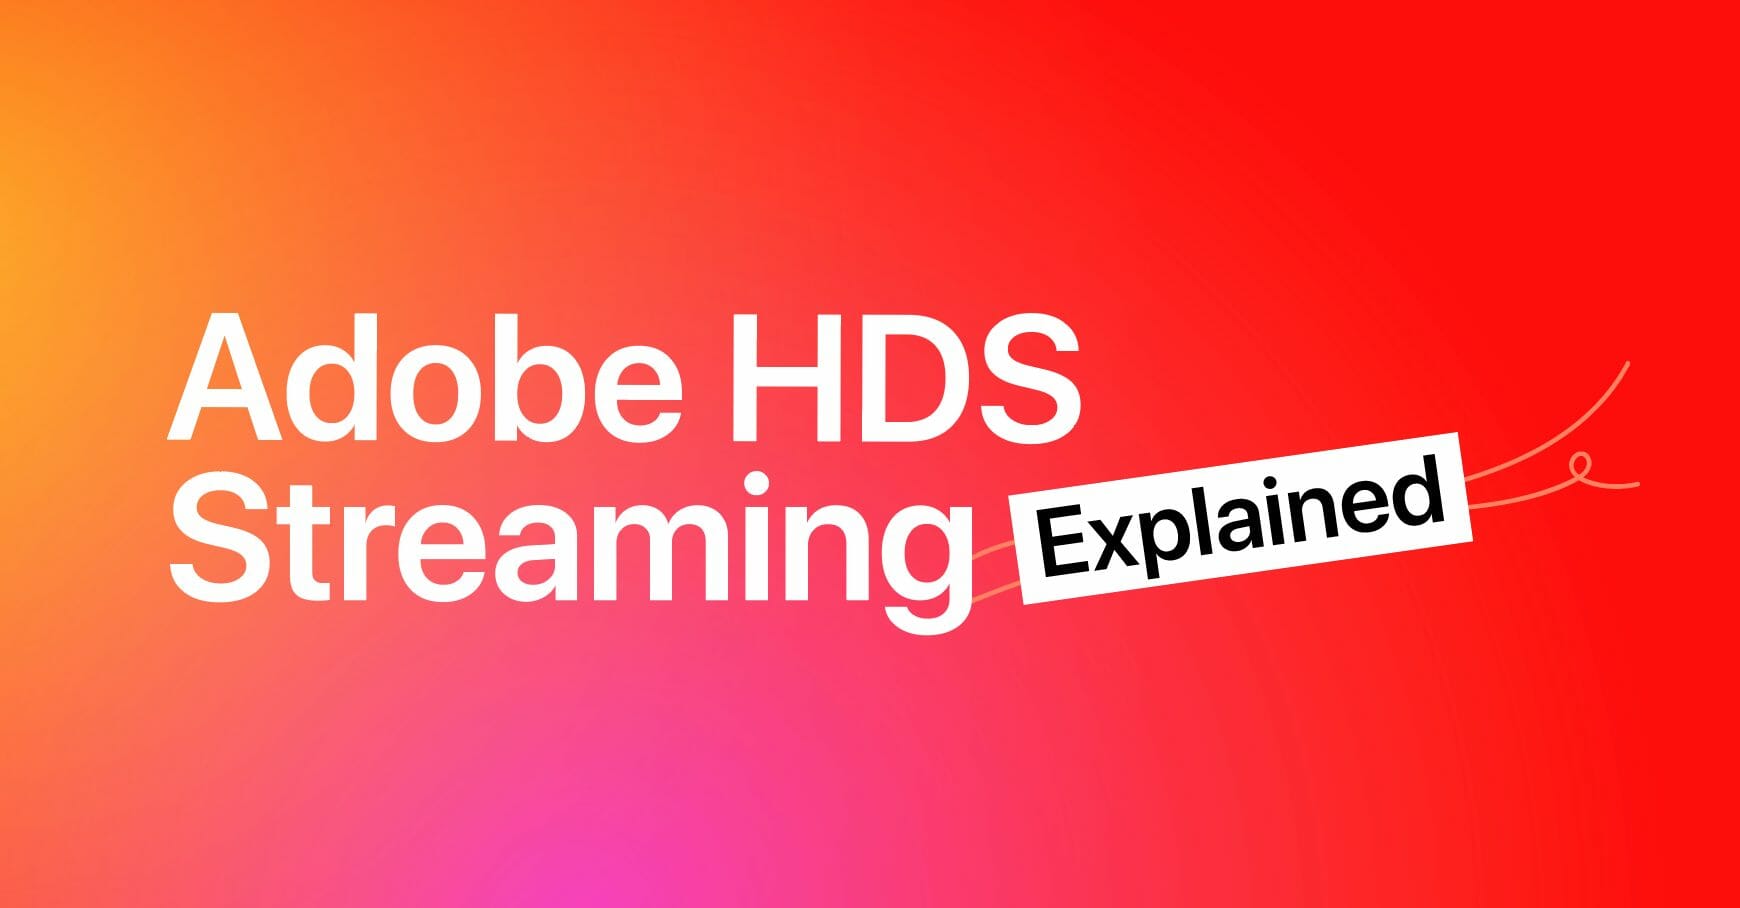 Adobe HDS Streaming